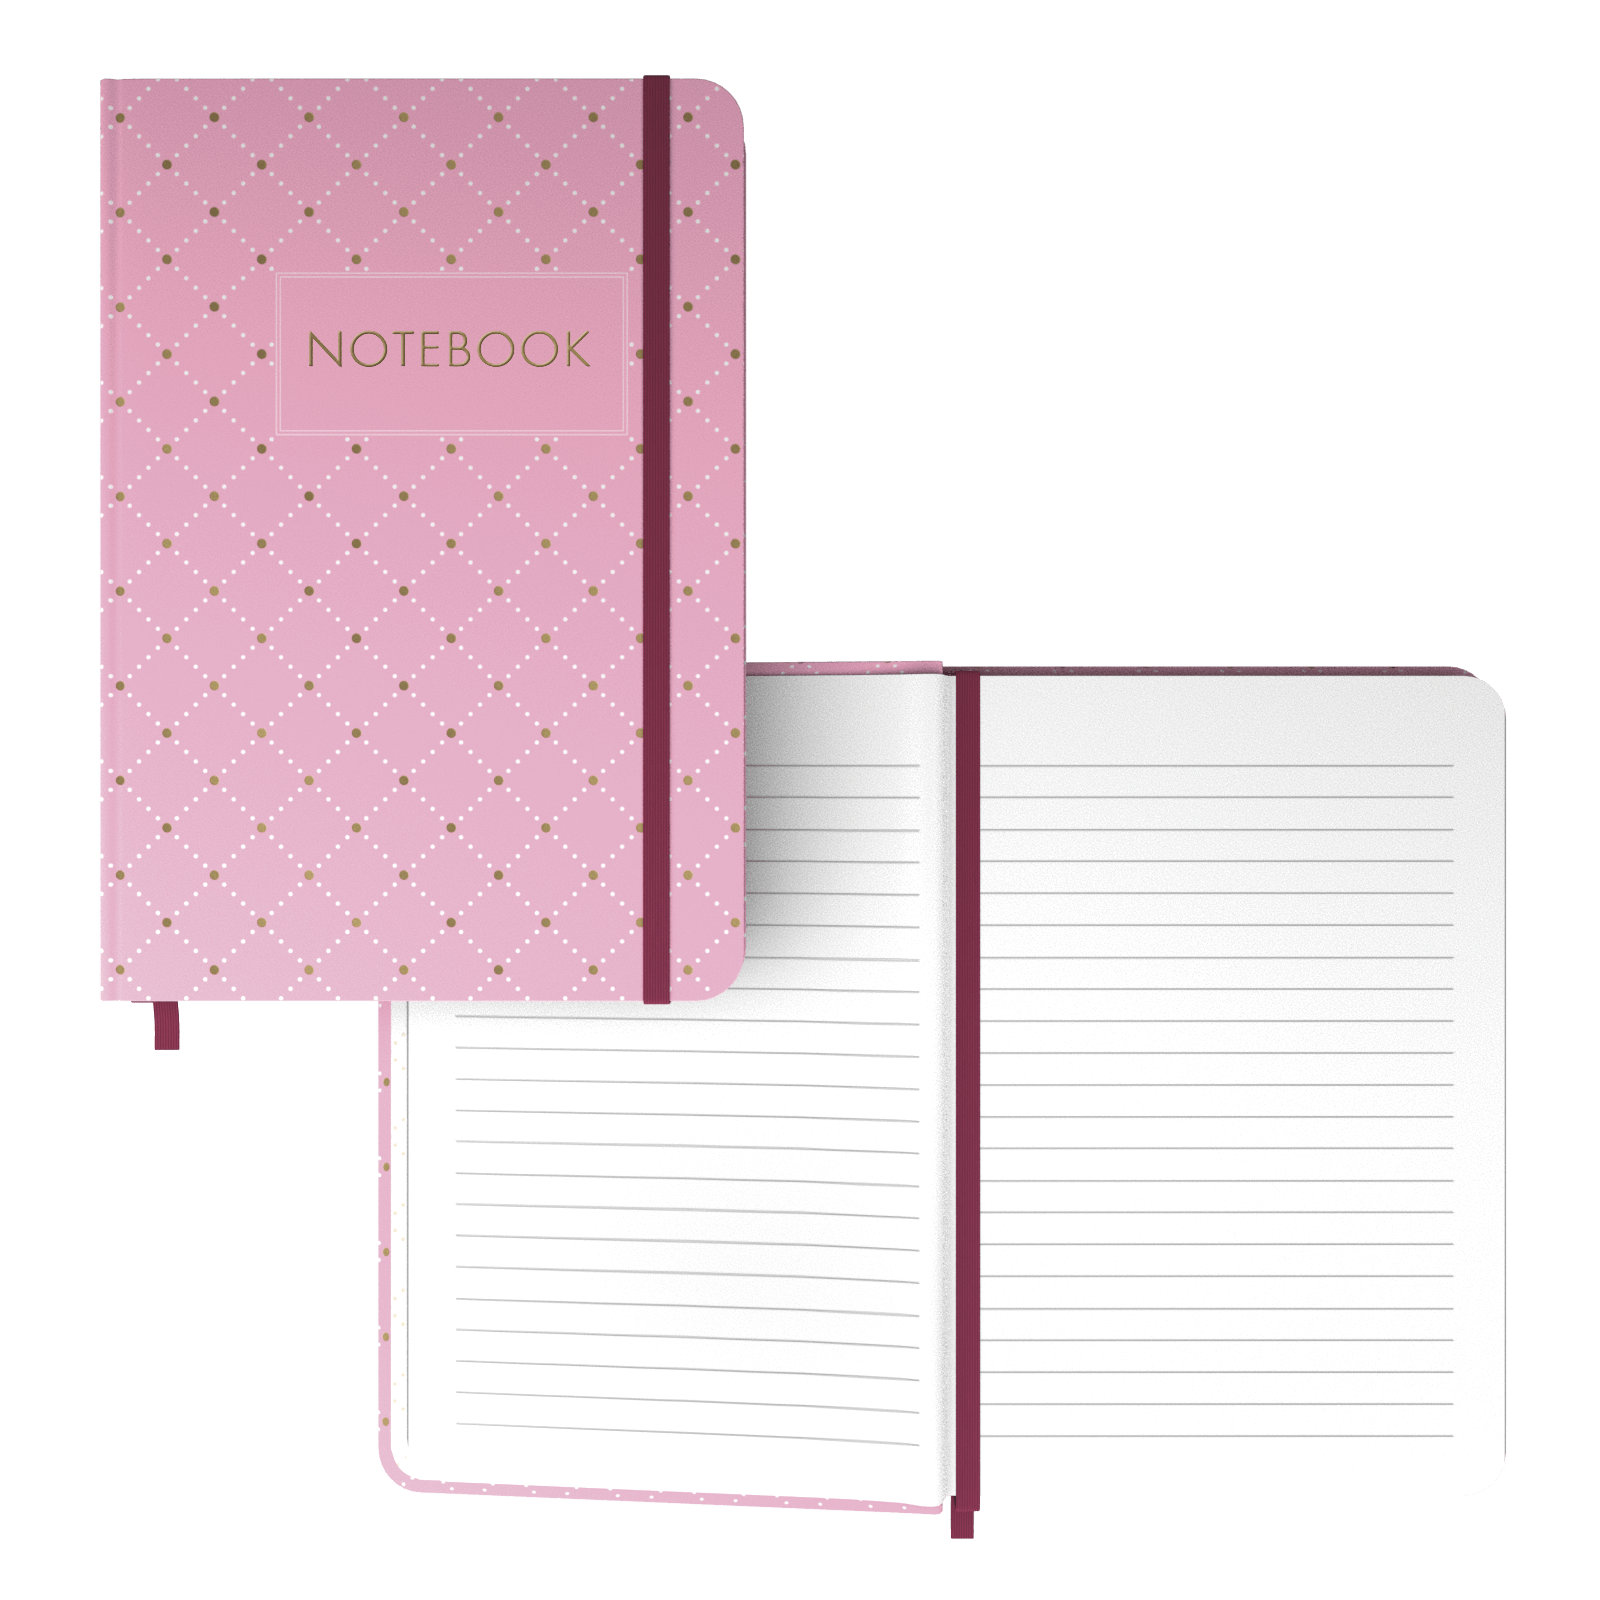 Allure notebook